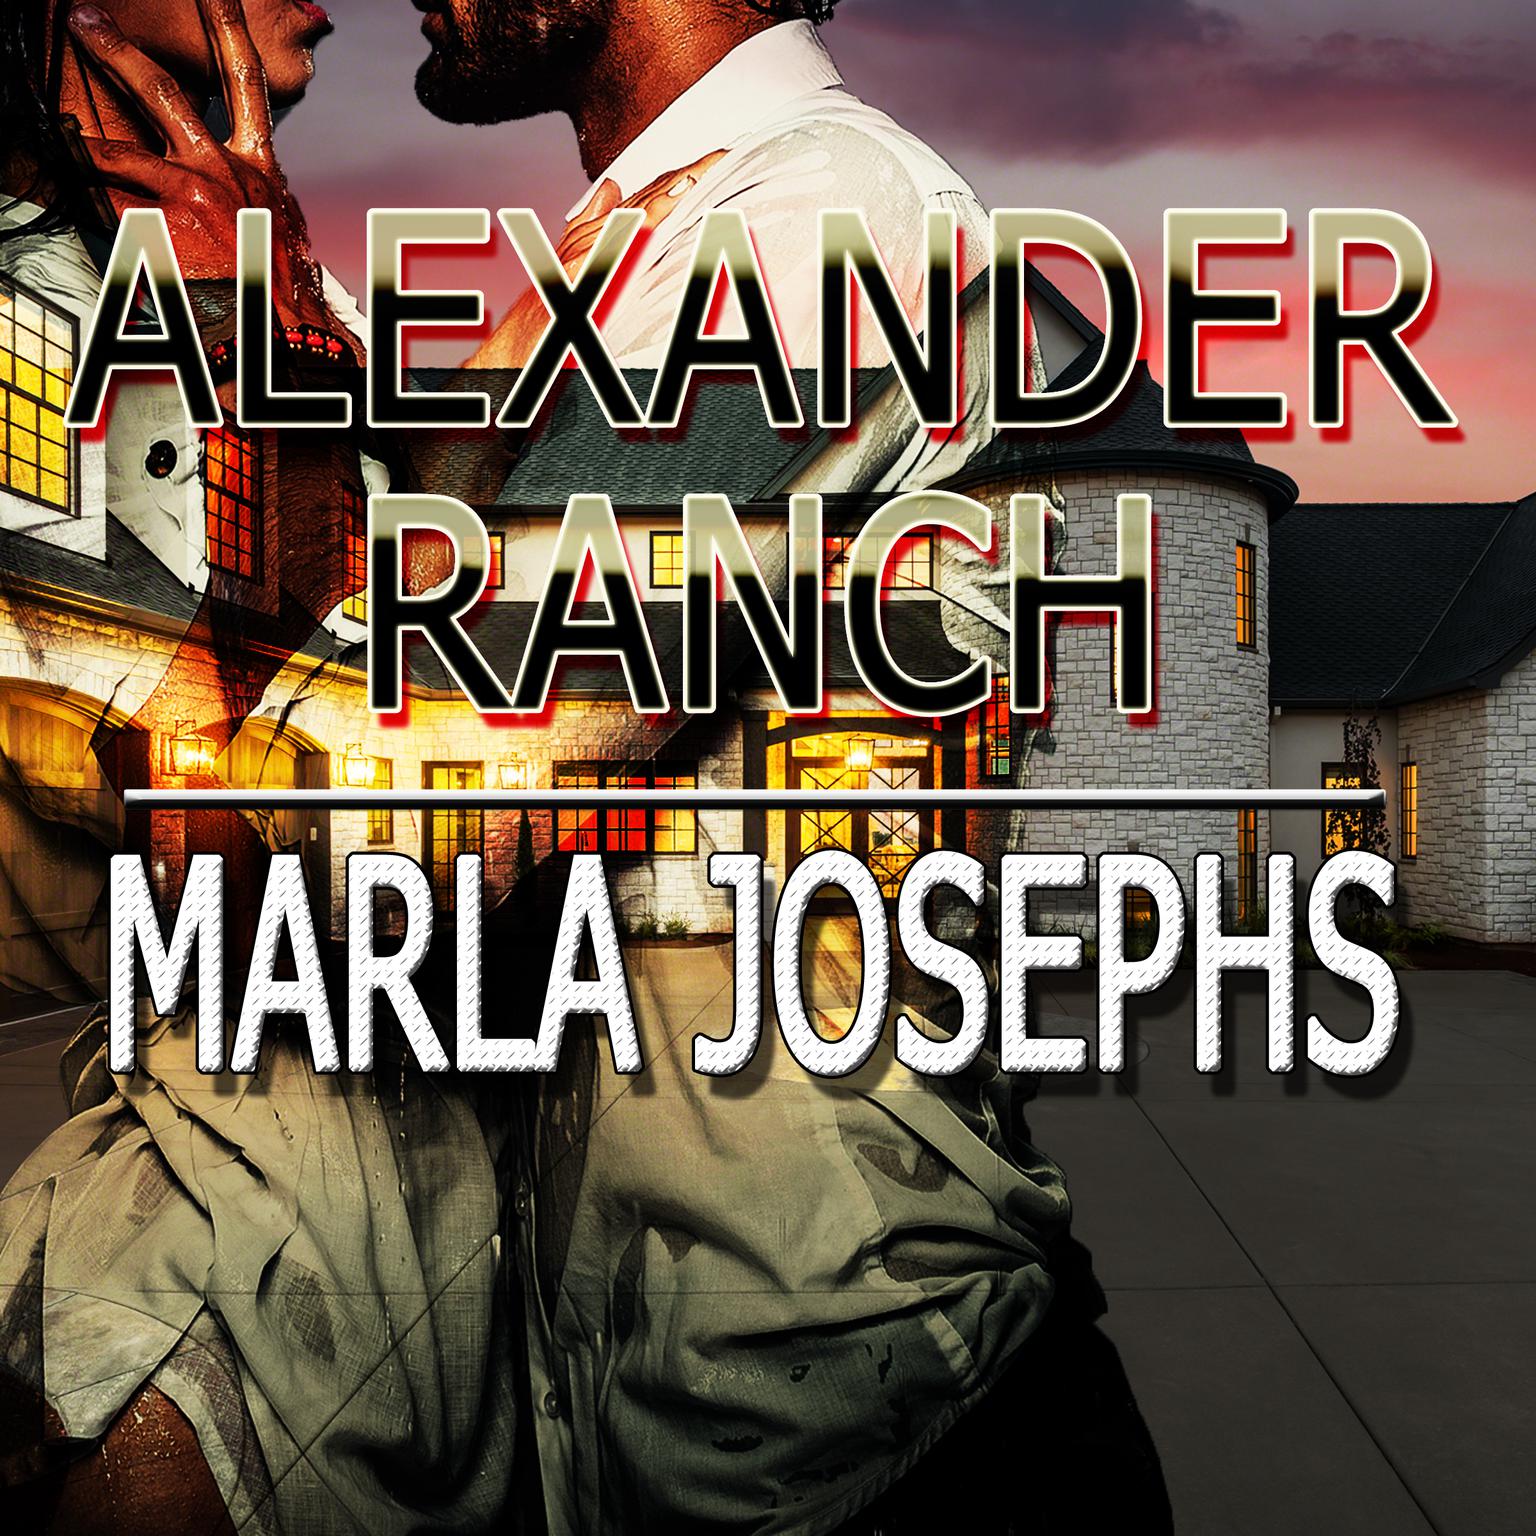 Alexander Ranch Audiobook, by Marla Josephs